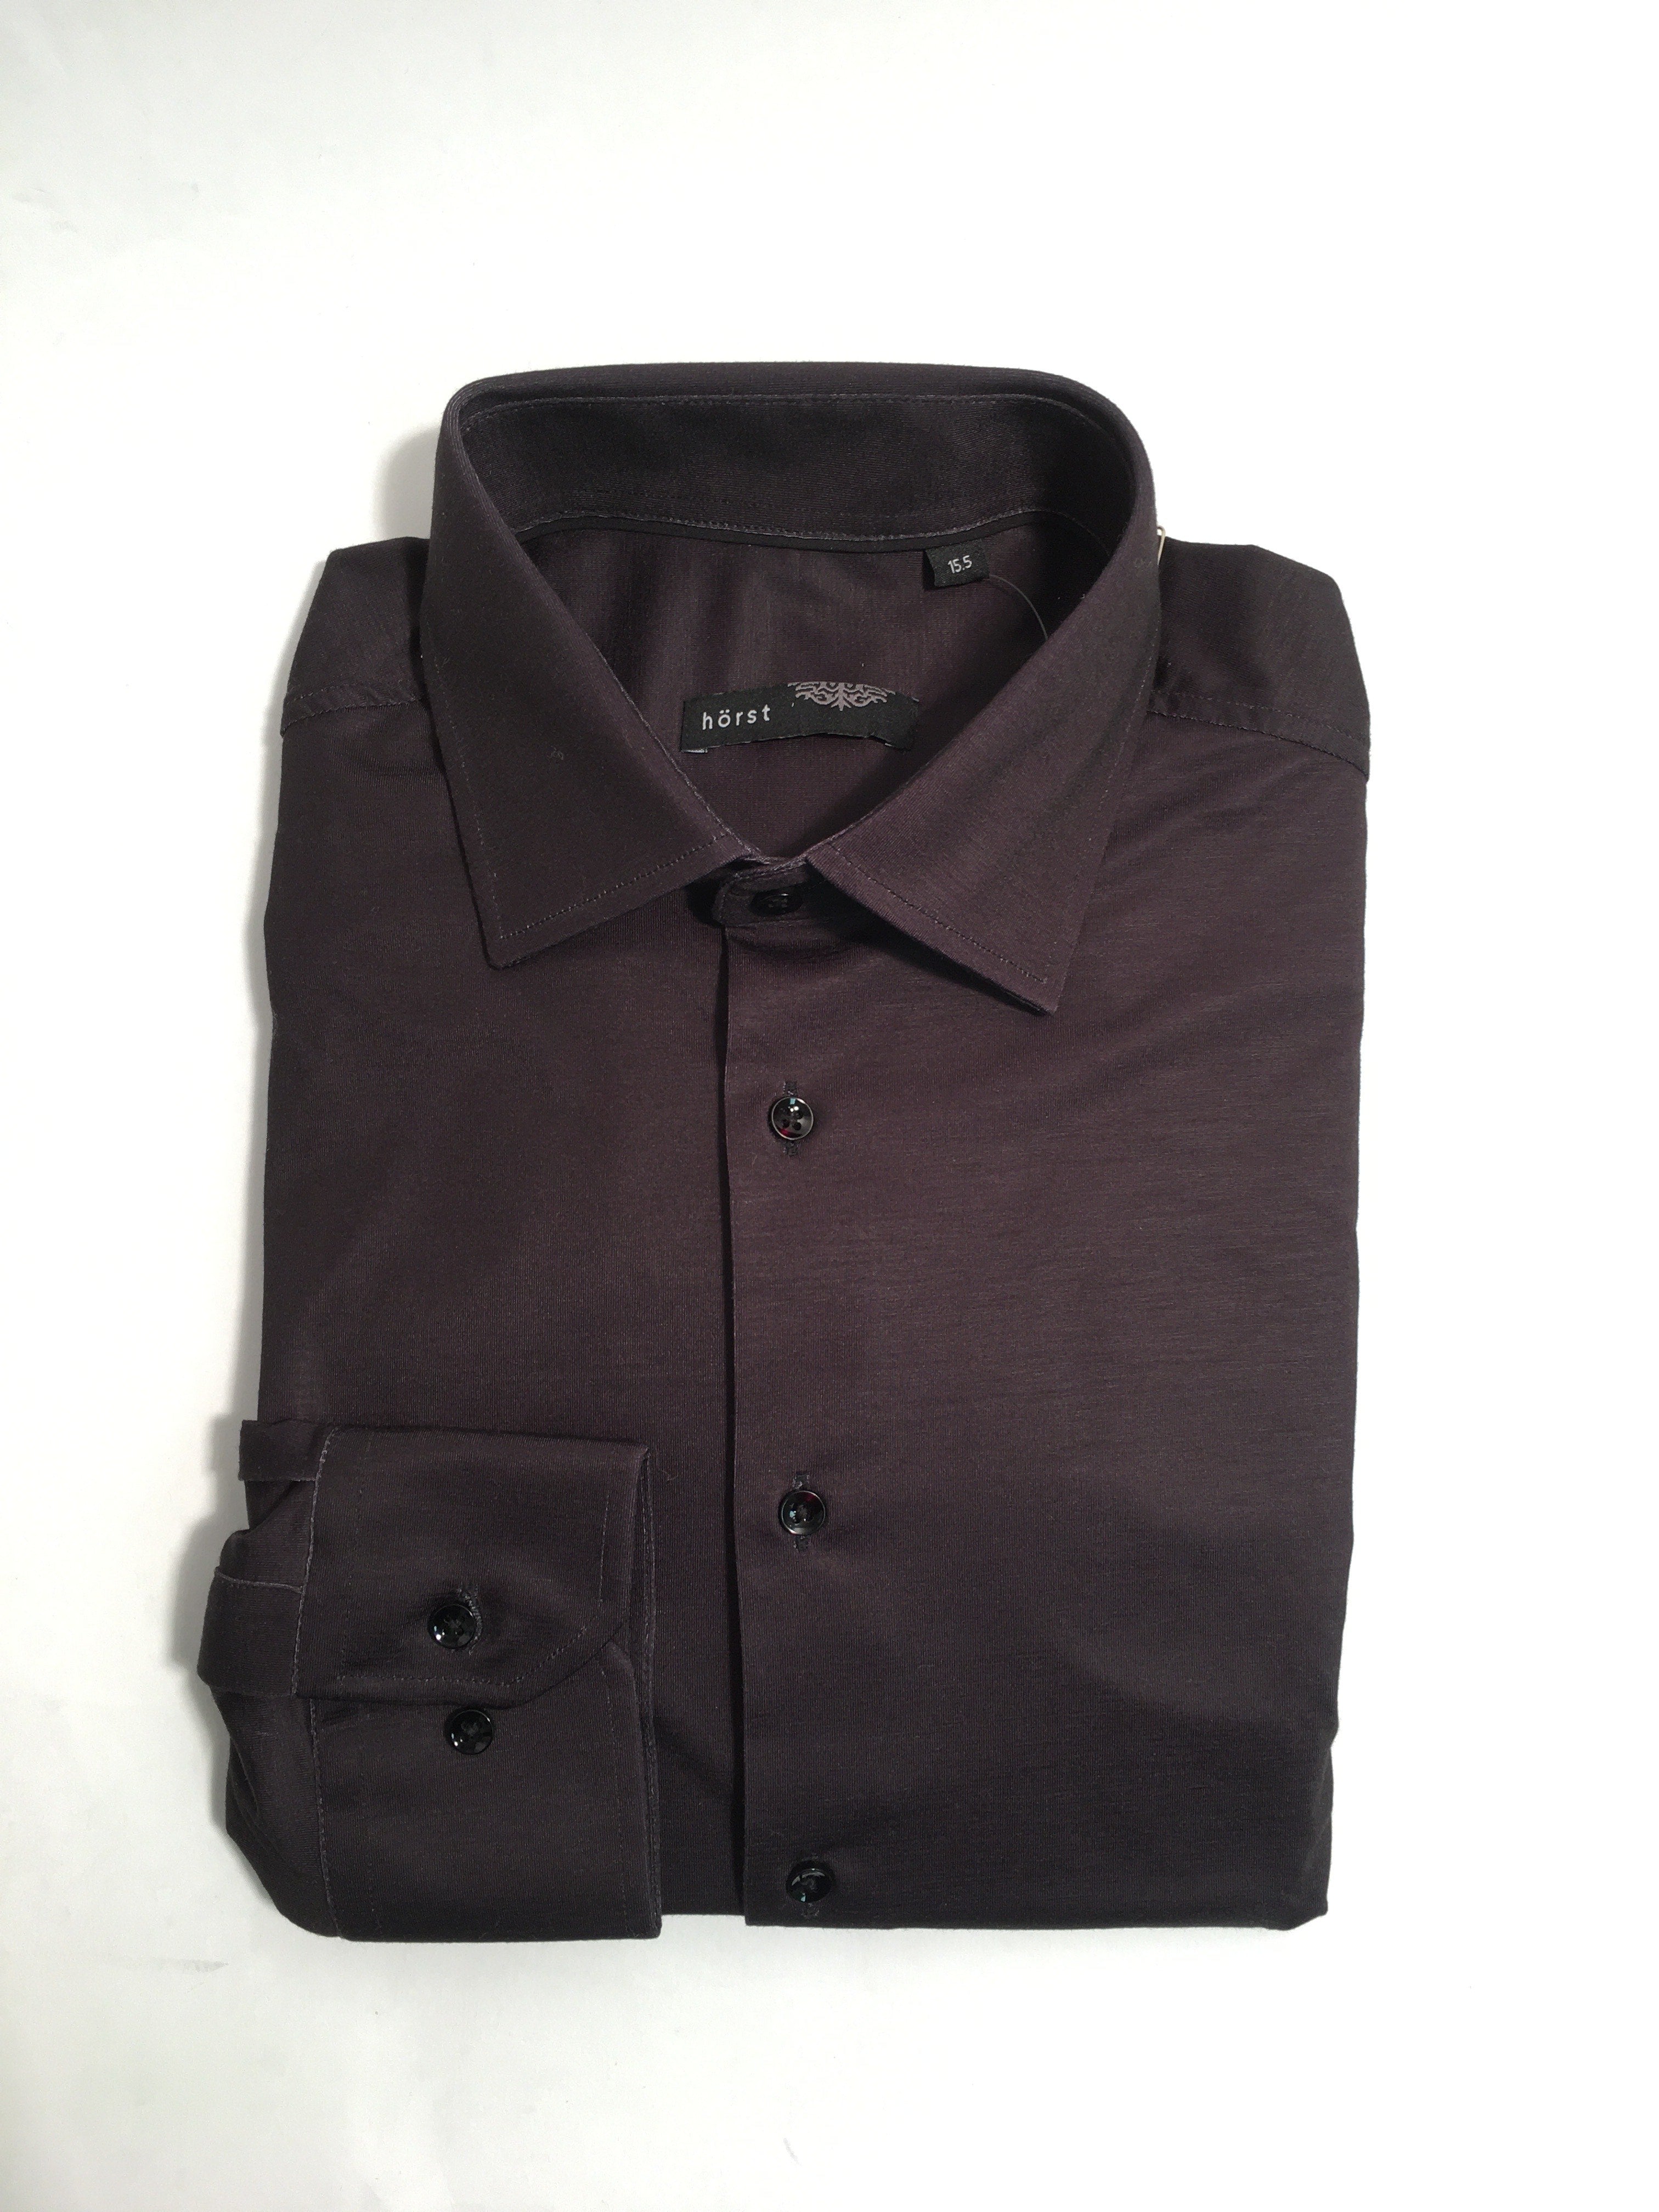 Men's Modern Fit Black Button-Down Shirt